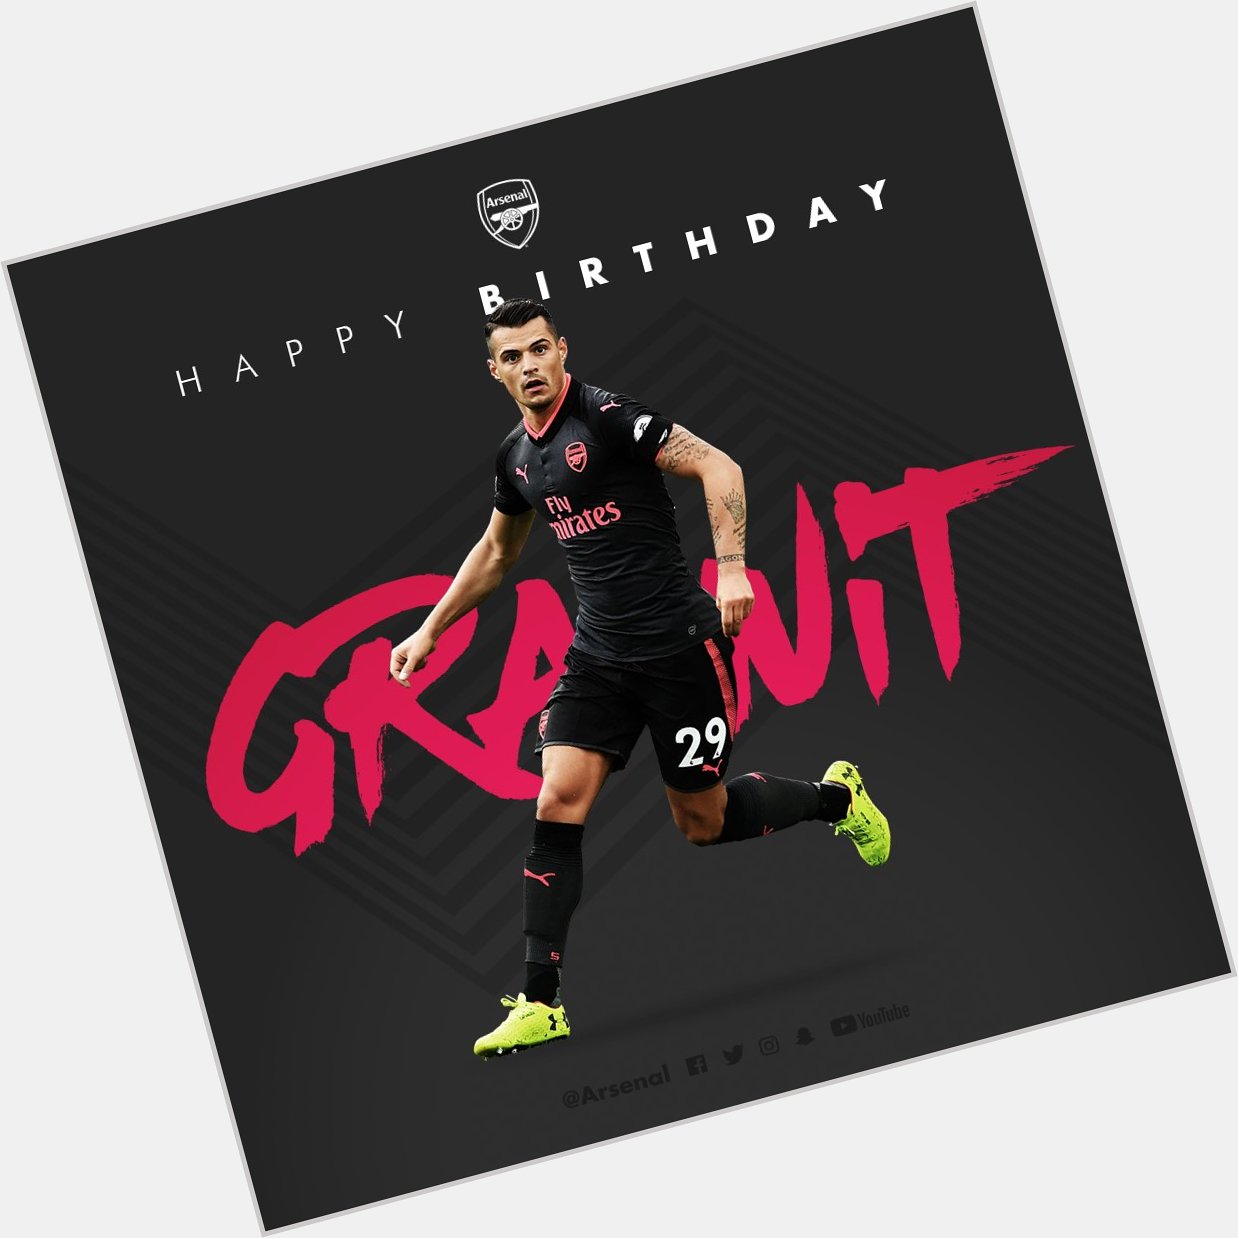 We wish a very Happy Birthday to Granit Xhaka who turns 25 today. 